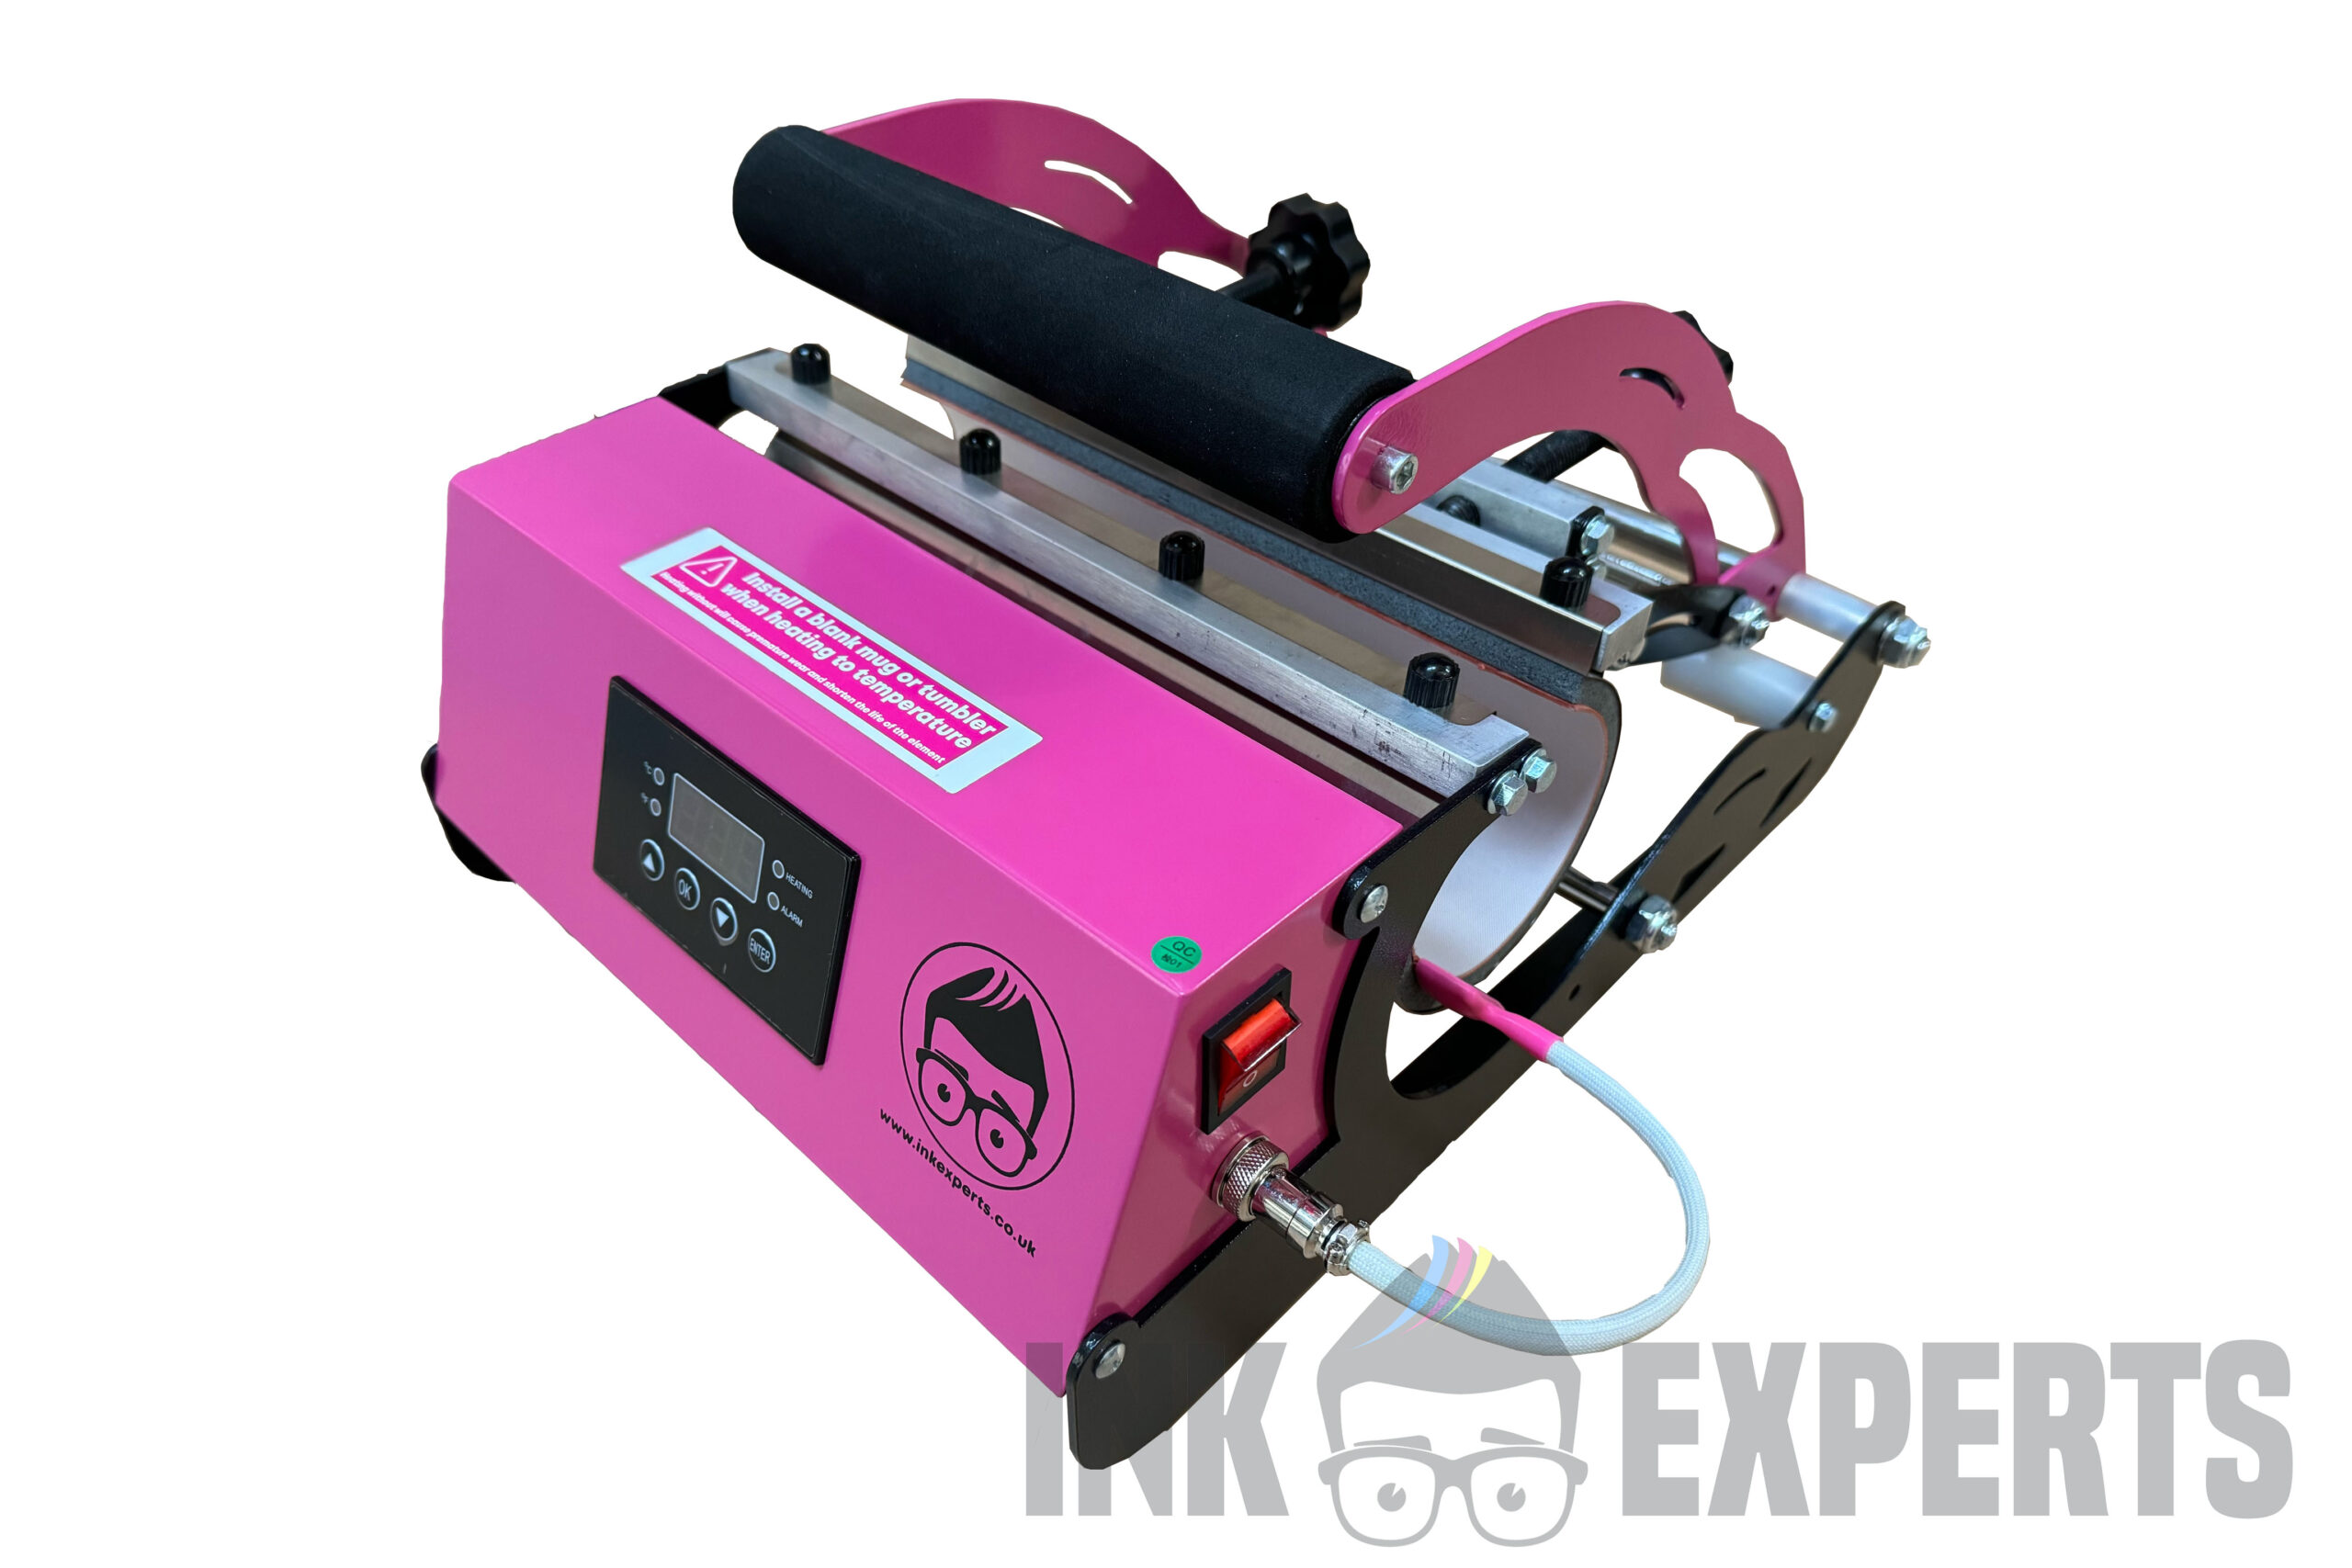 Ink Experts Tumbler Heat Press Machine with 20oz Heating Element